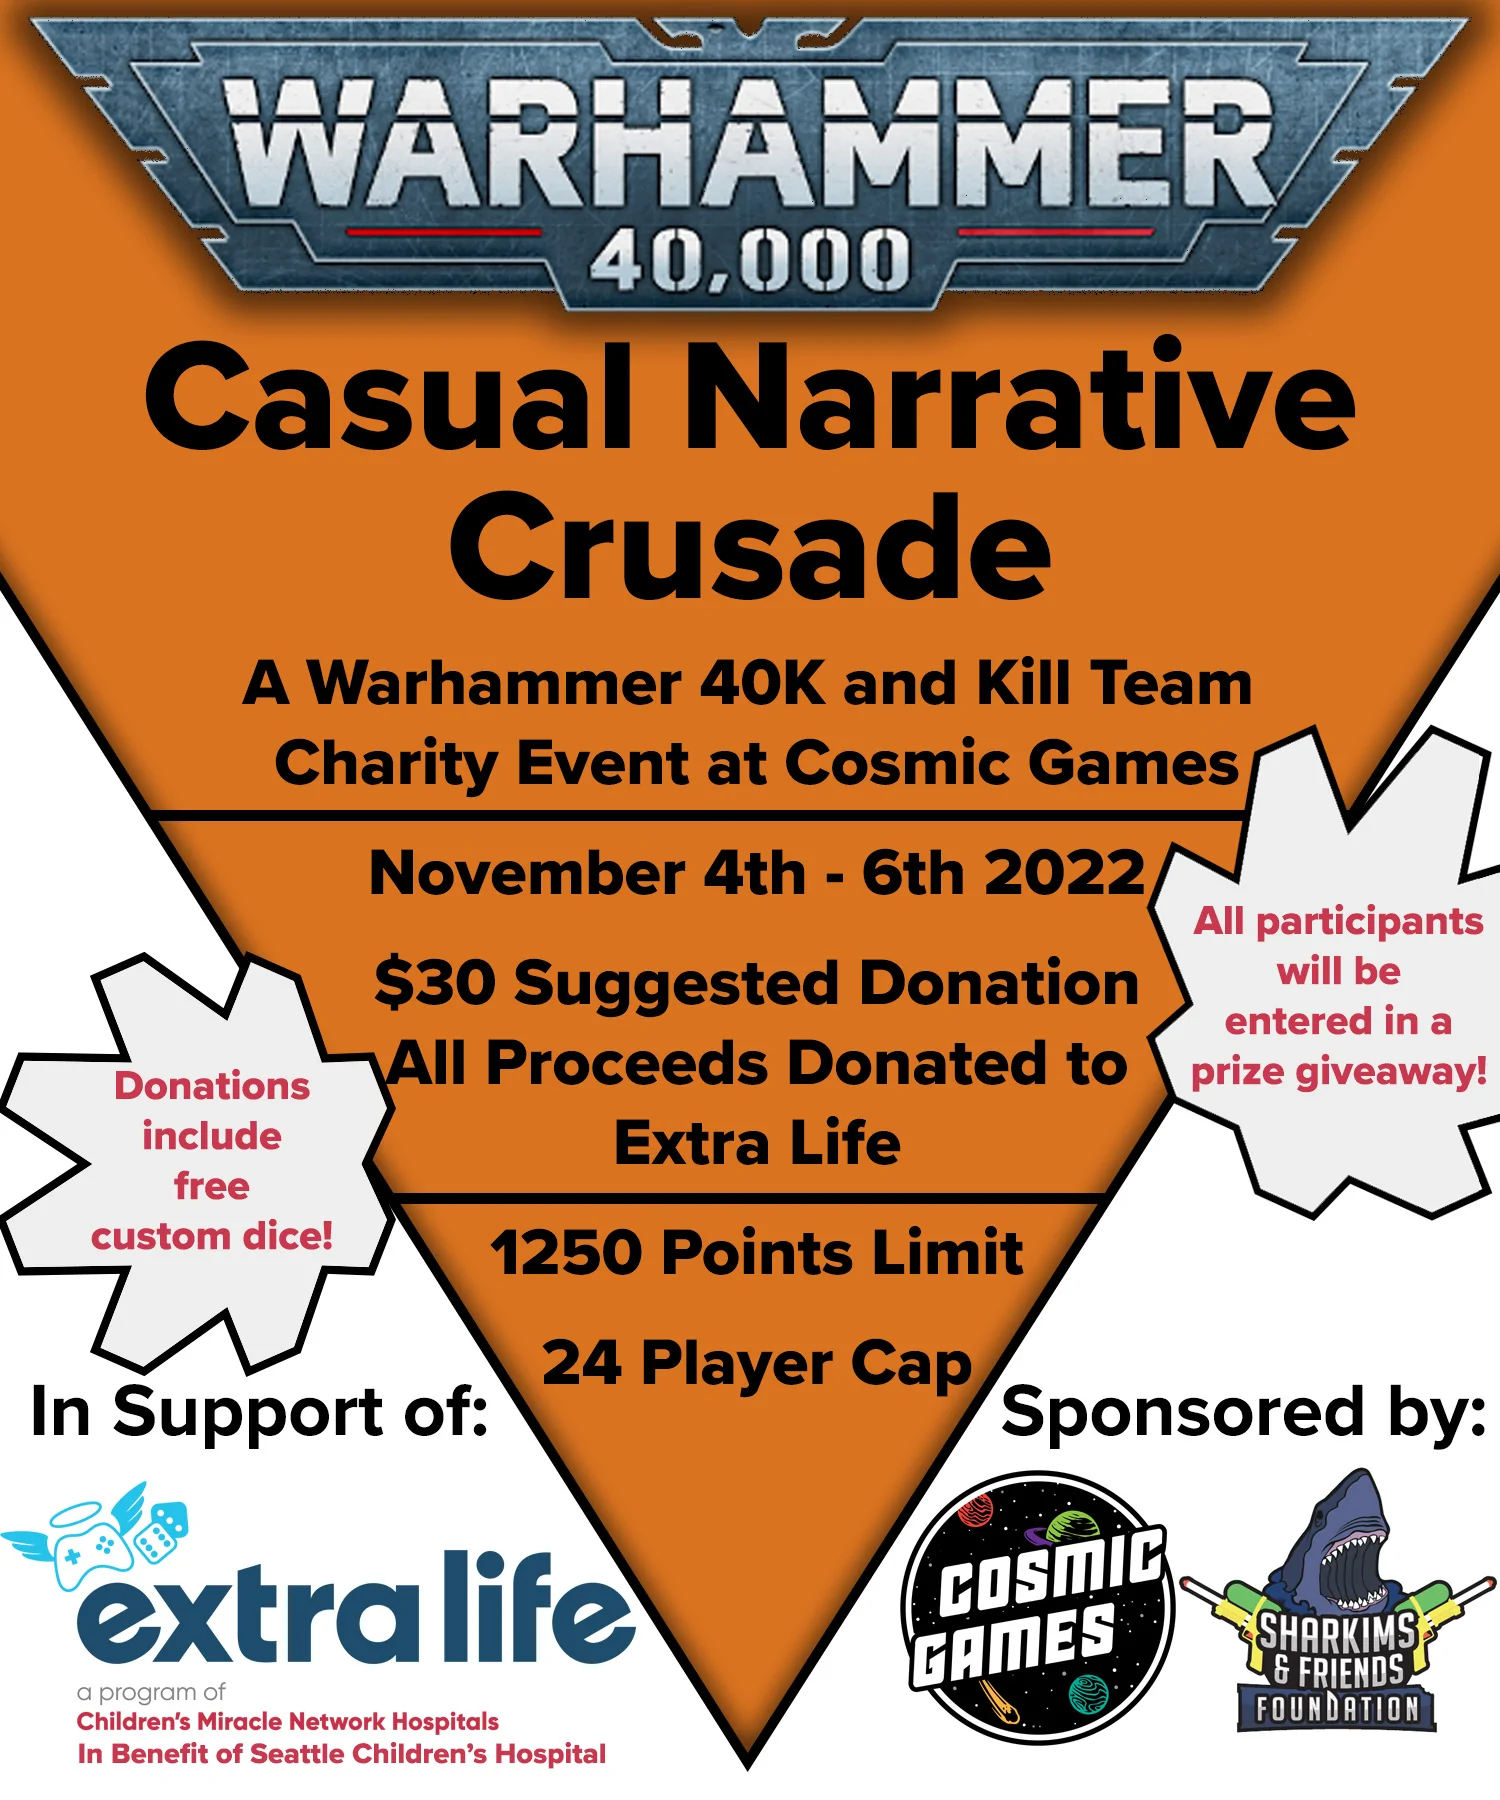 Casual Crusade Narrative - Extra Life Event at Cosmic Games